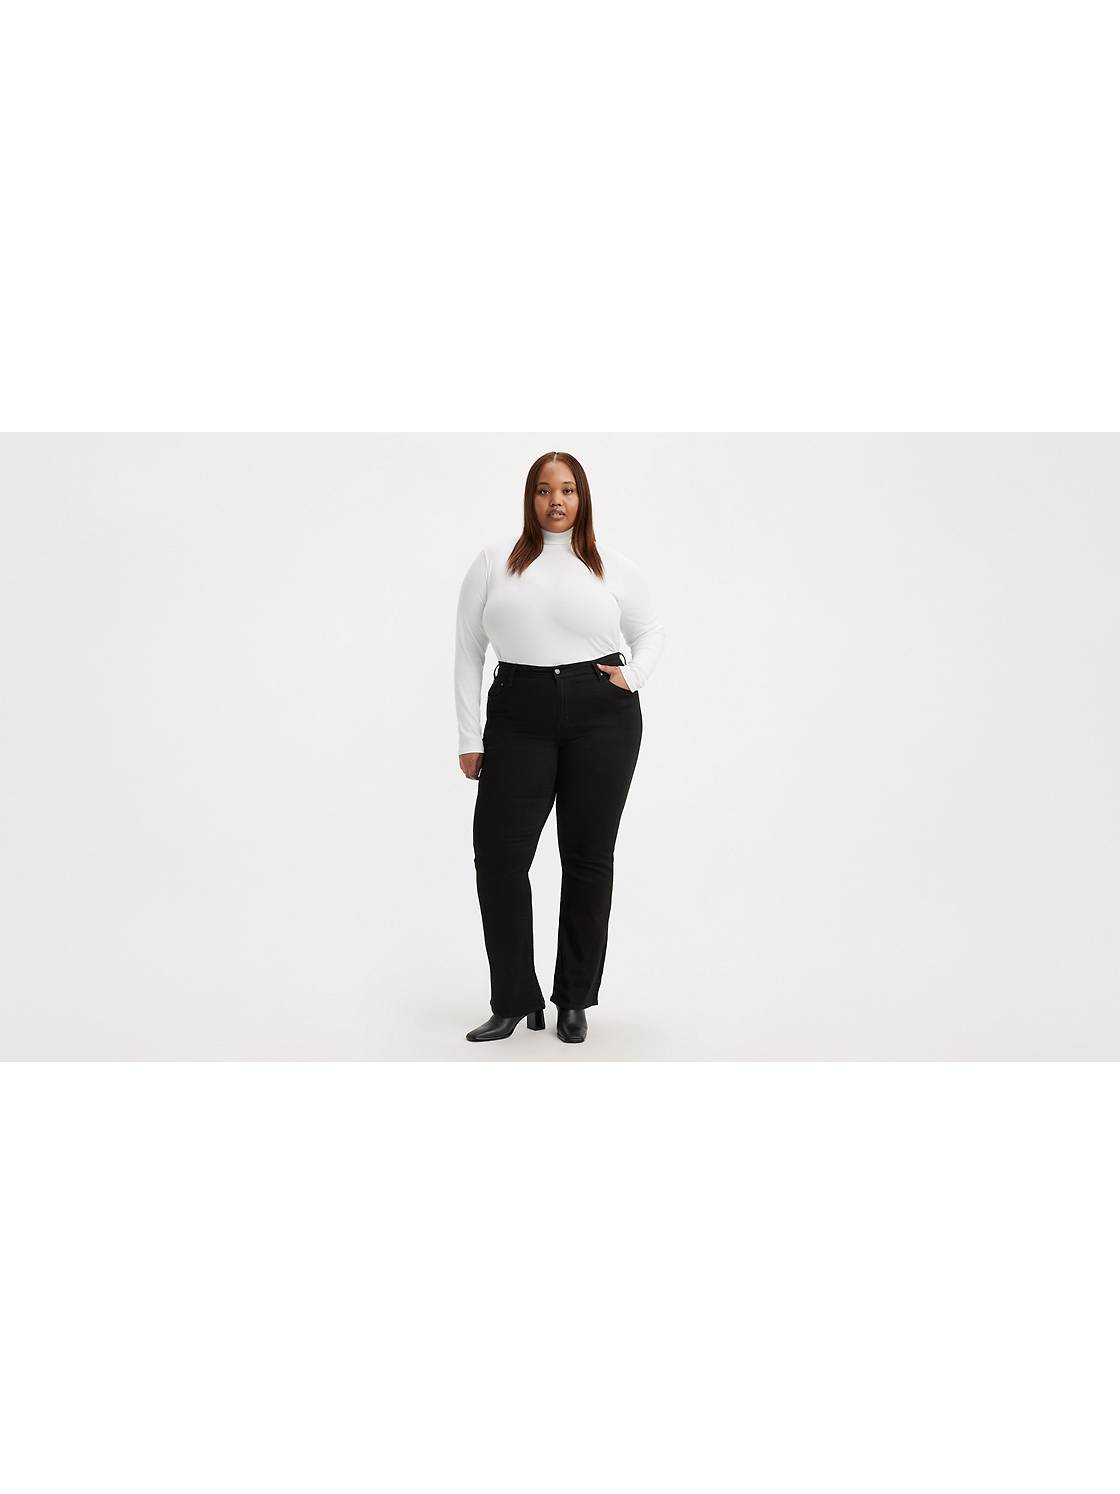 Plus Size Flare Leggings Womens Black Dressy Pants with Pocket Slim Fit  Loose High Waist Athletic Workout Leggings Elegant Versatile (Black, S) Add  On Items Under 1 Dollar Deals of Today Prime